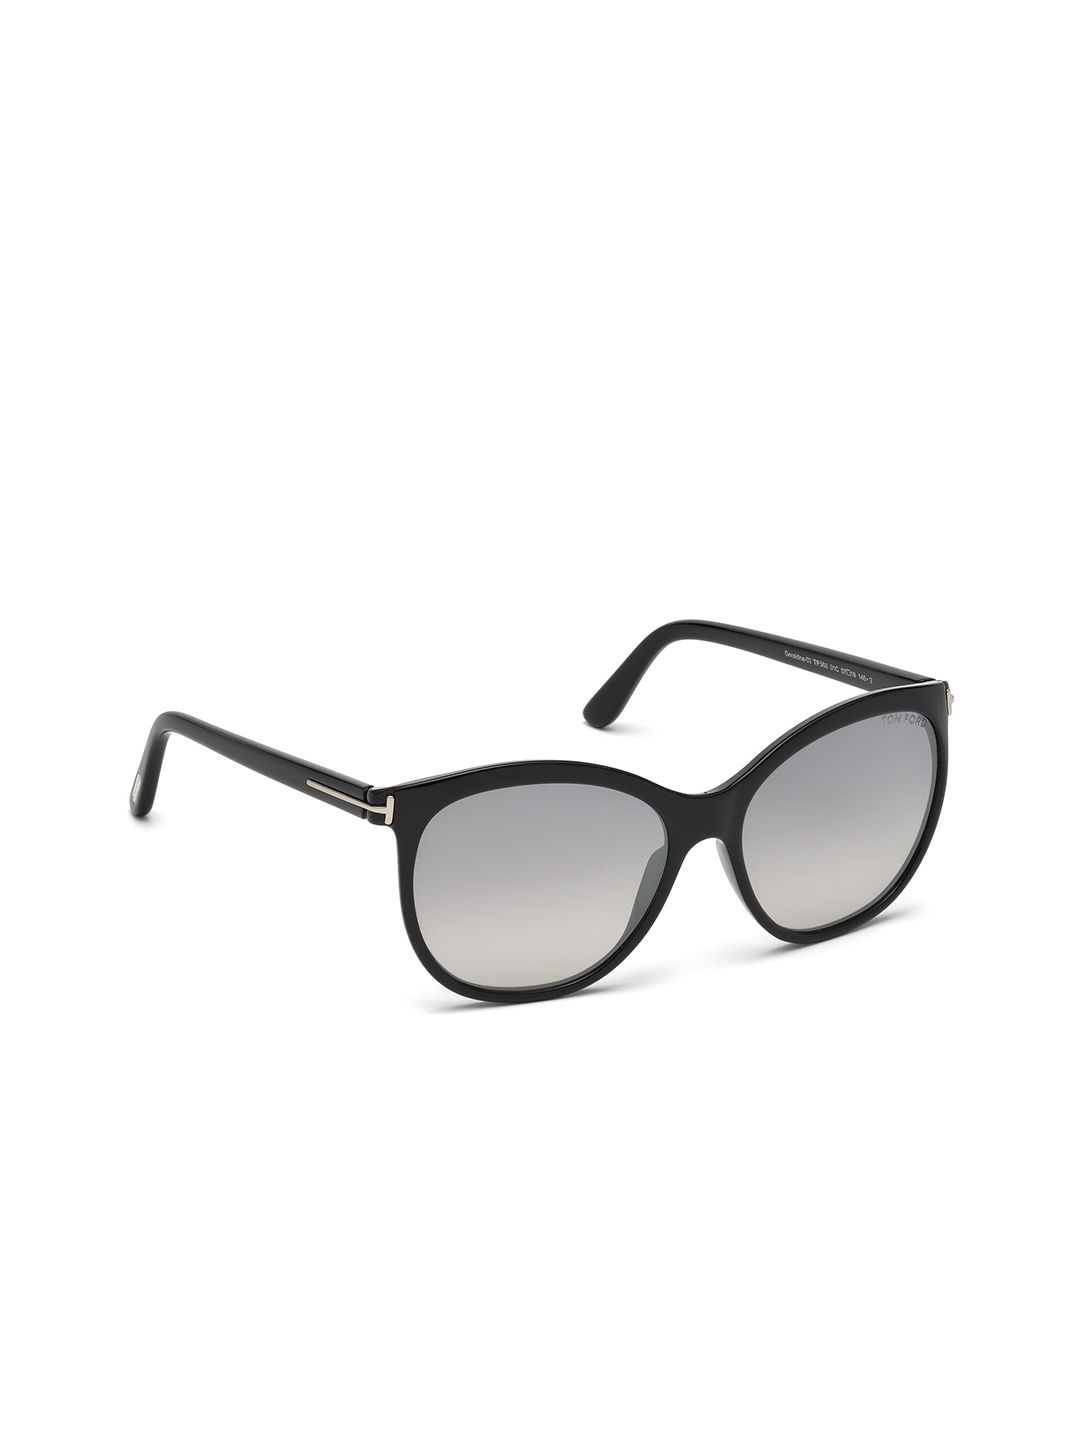 Tom Ford Women Grey Lens & Black Wayfarer Sunglasses - FT0568 57 01C-Black Price in India